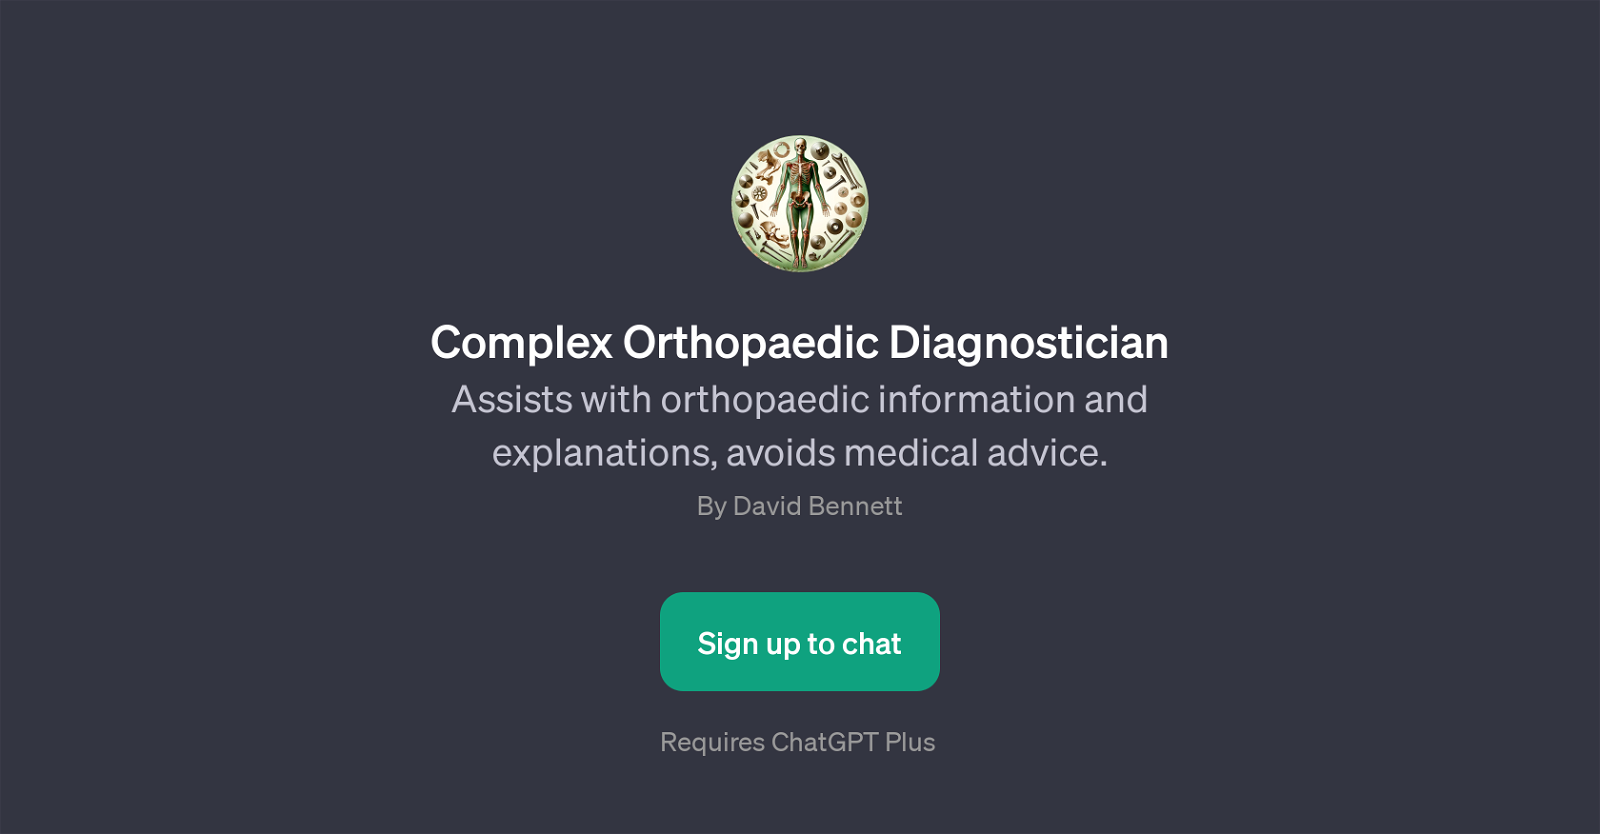 Complex Orthopaedic Diagnostician website